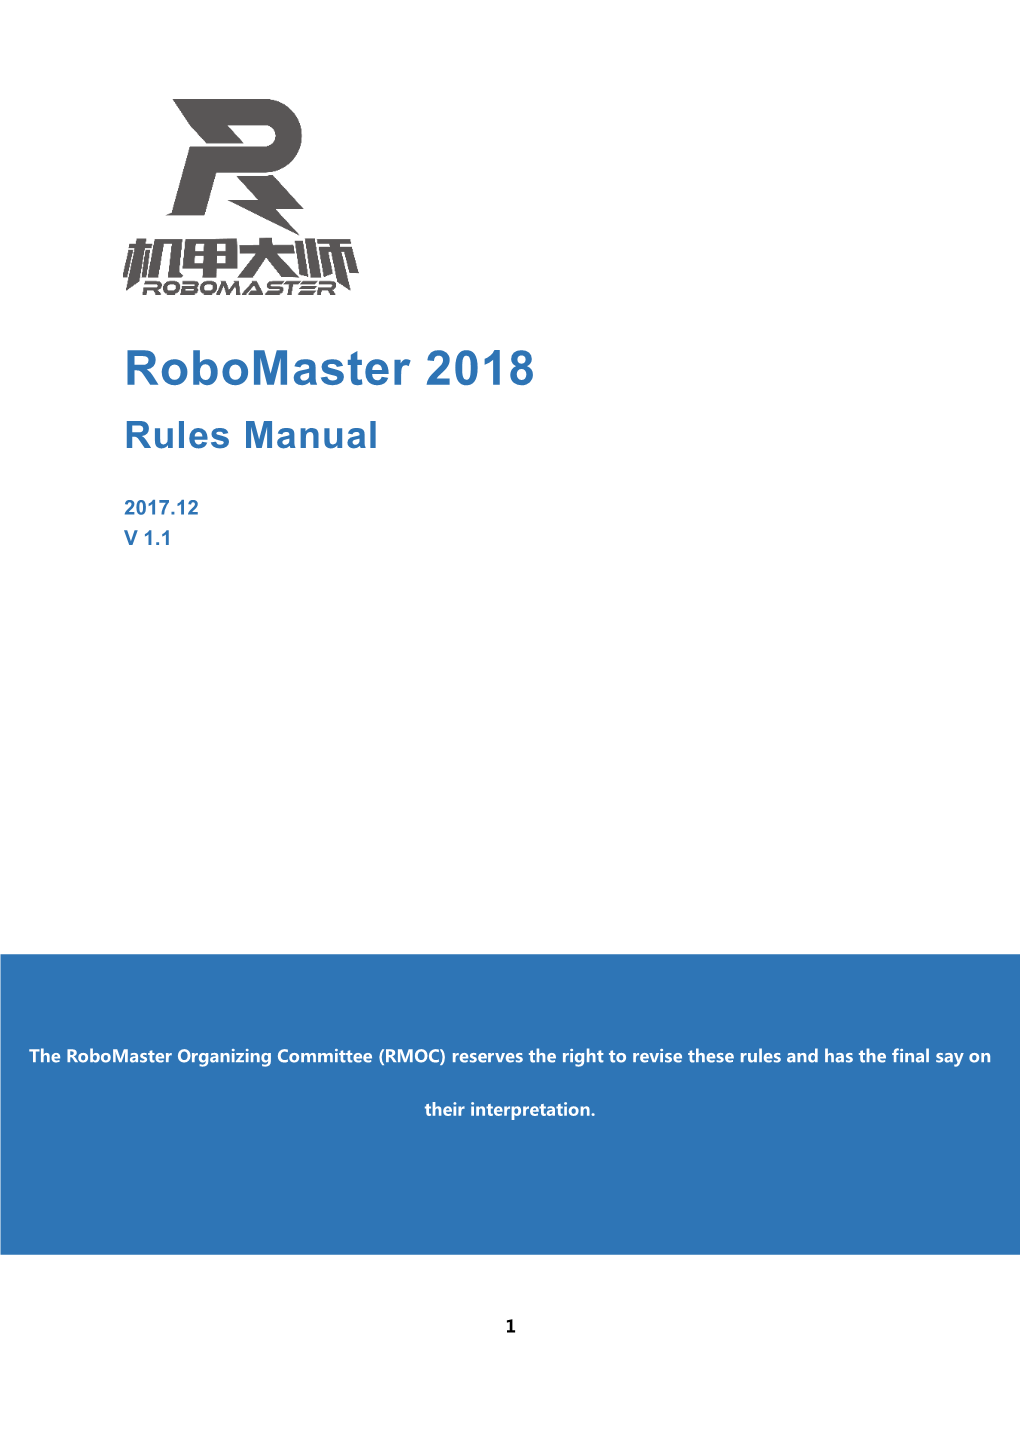 Robomaster 2018 Rules Manual